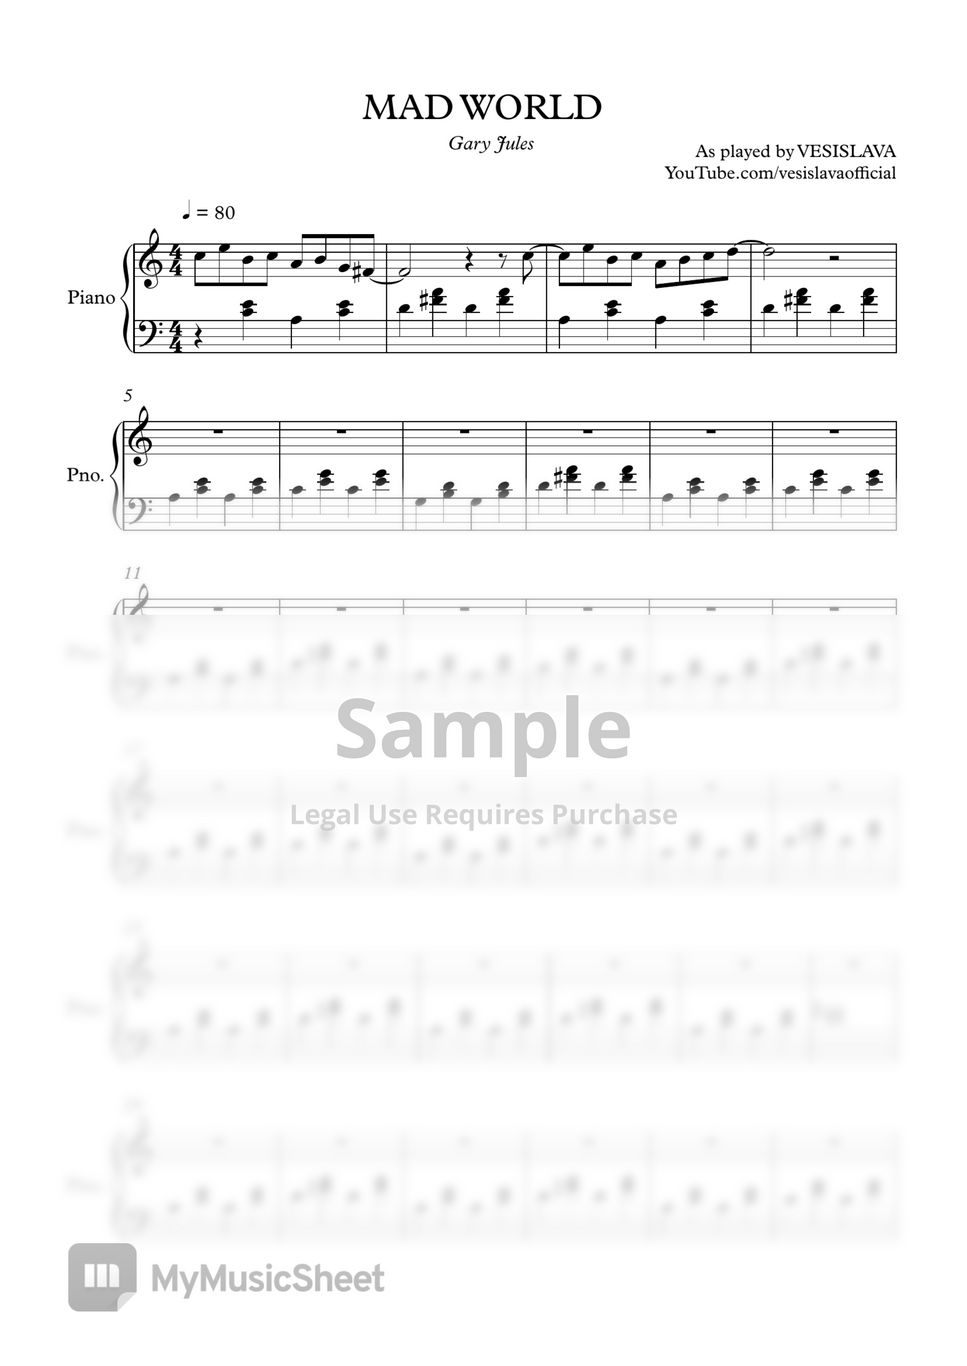 Gary Jules - MAD WORLD + Finger marks (Cello & Piano) by Vesislava